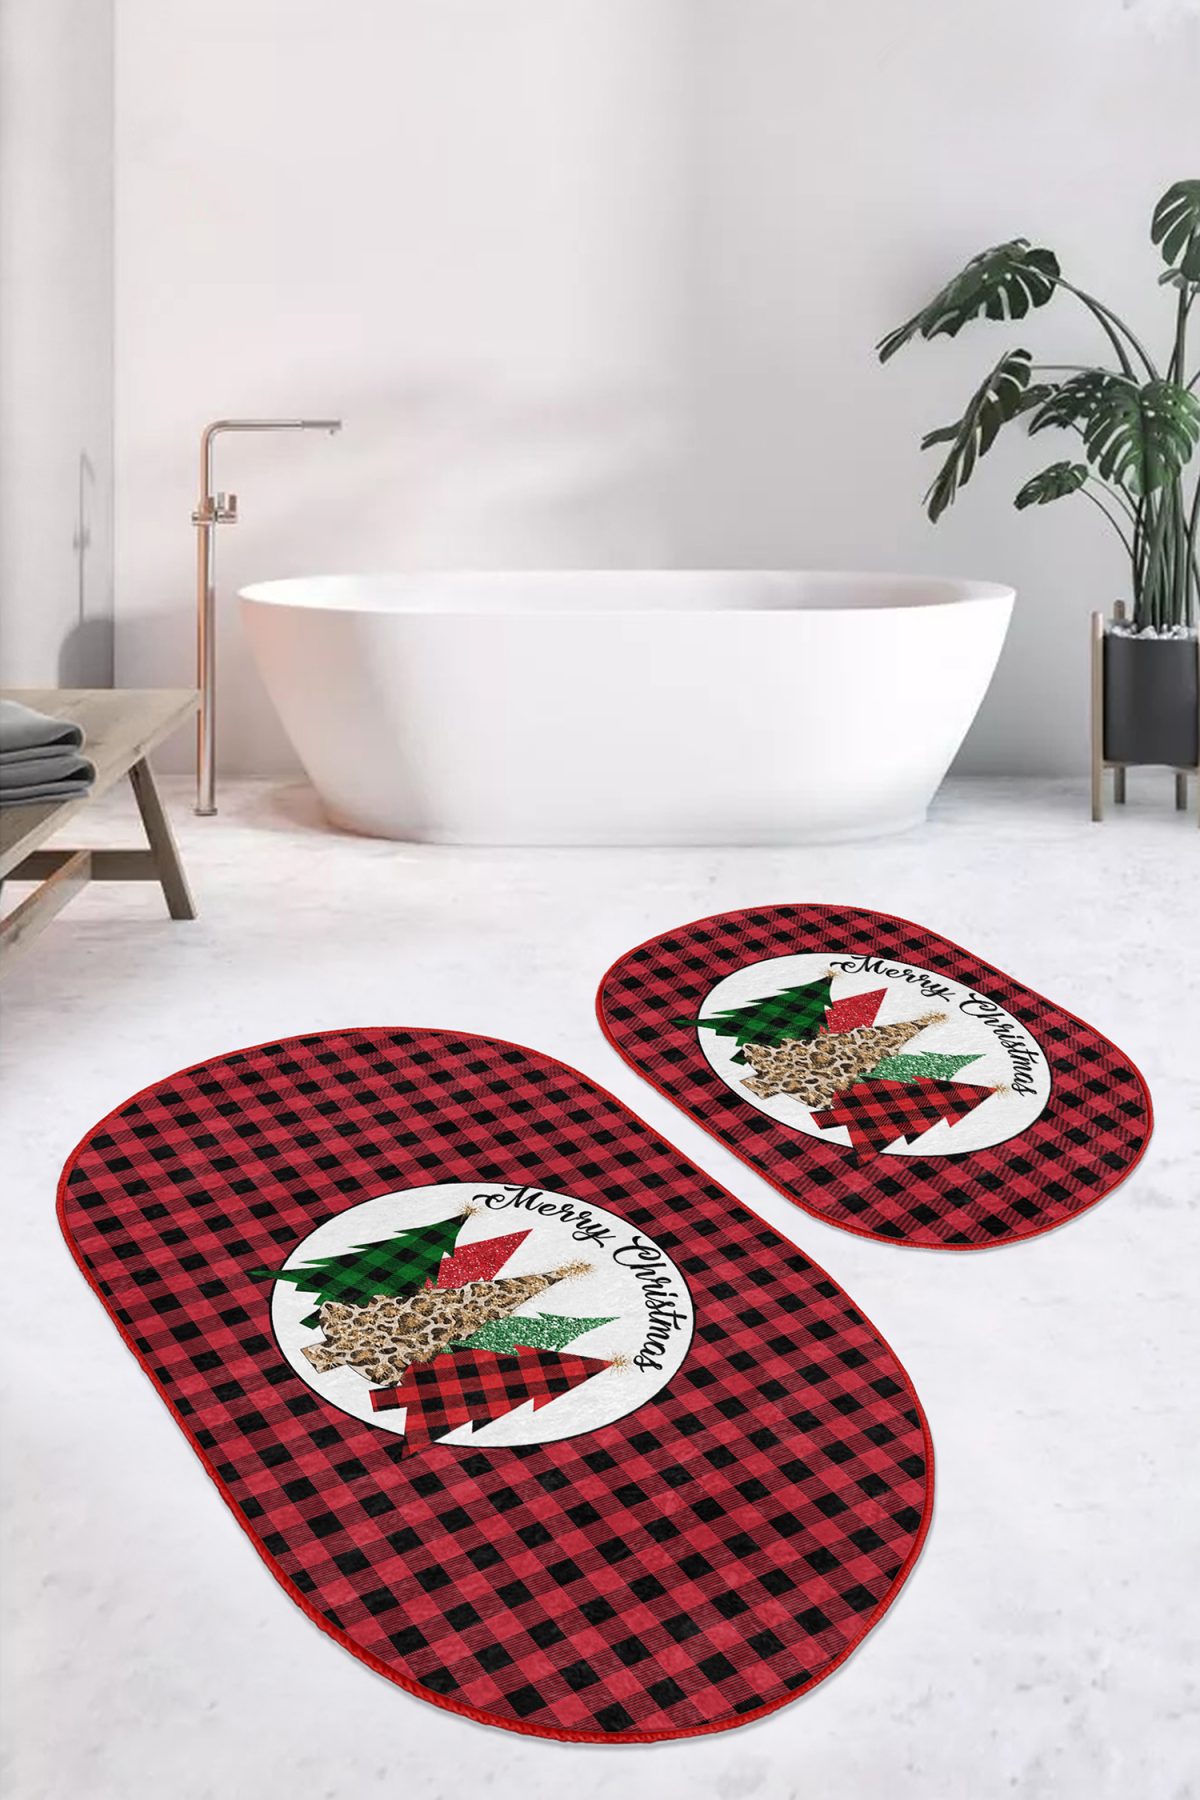 Mery Christmas Temalı Kırmızı Ekoseli 2'li Oval Banyo Halısı Seti & Klozet Paspas Takımı Realhomes